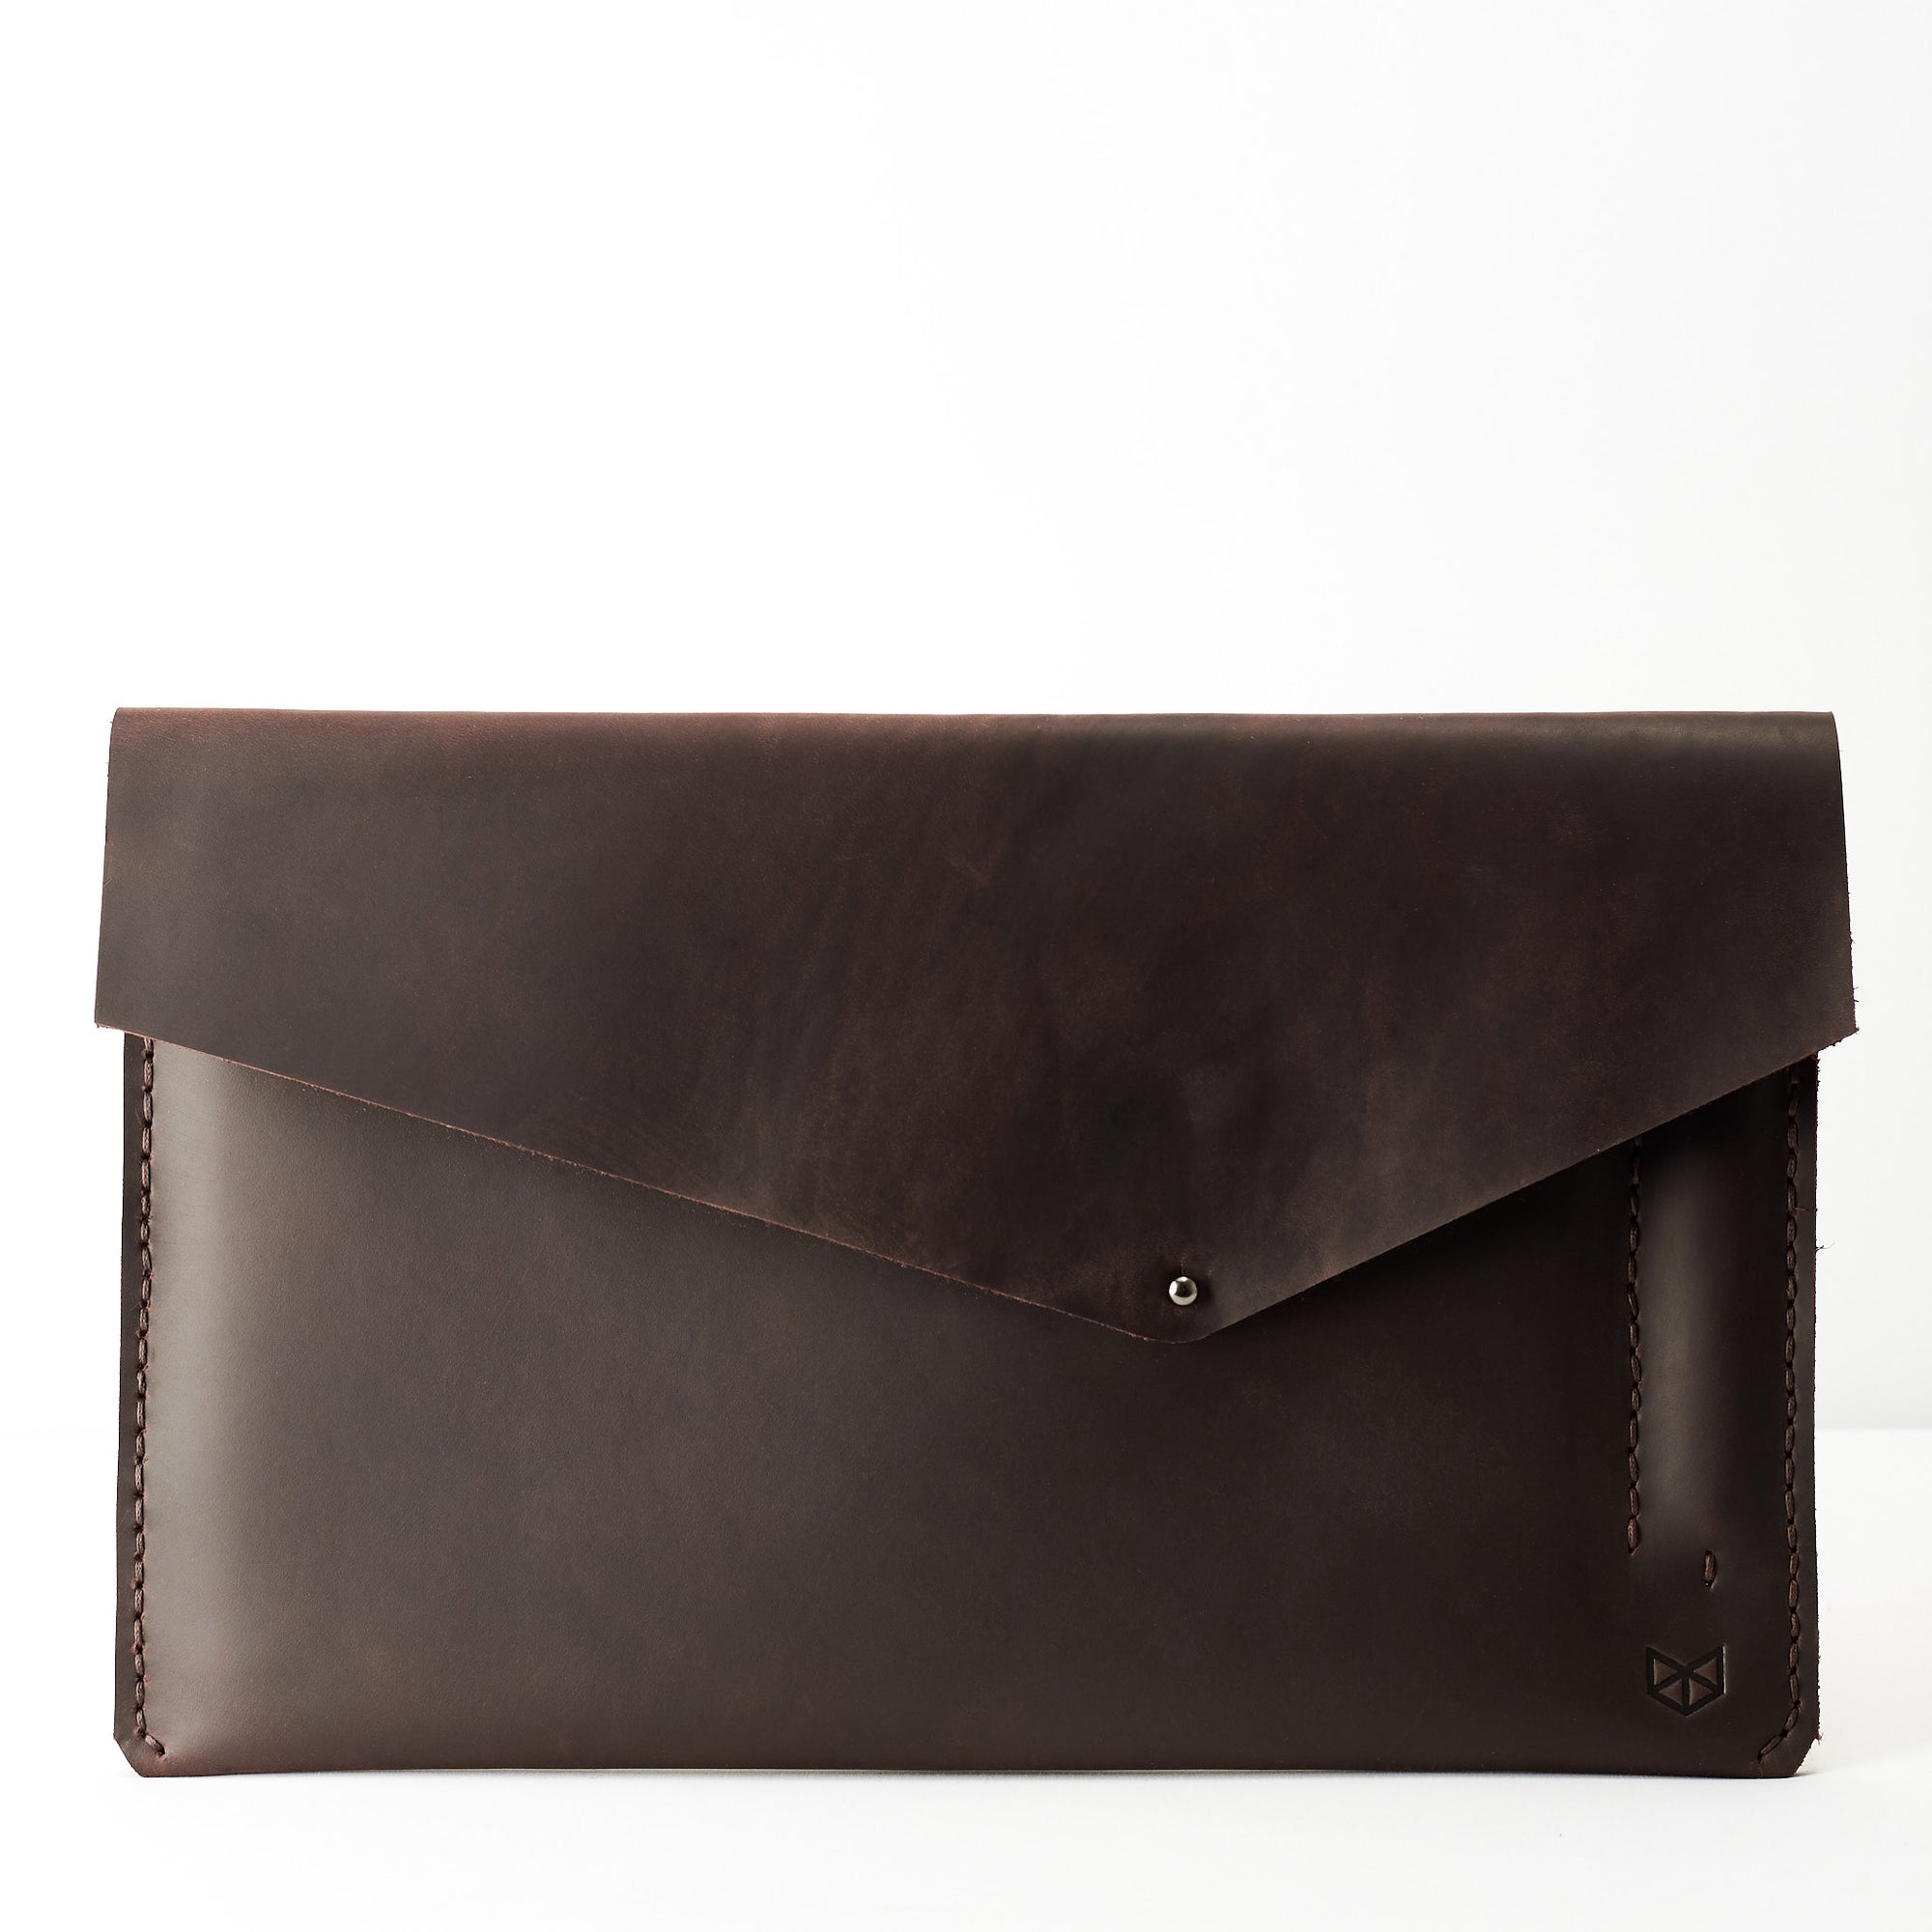 Dark brown handcrafted leather reMarkable tablet case. Folio with Marker holder. Paper E-ink tablet minimalist sleeve design. 